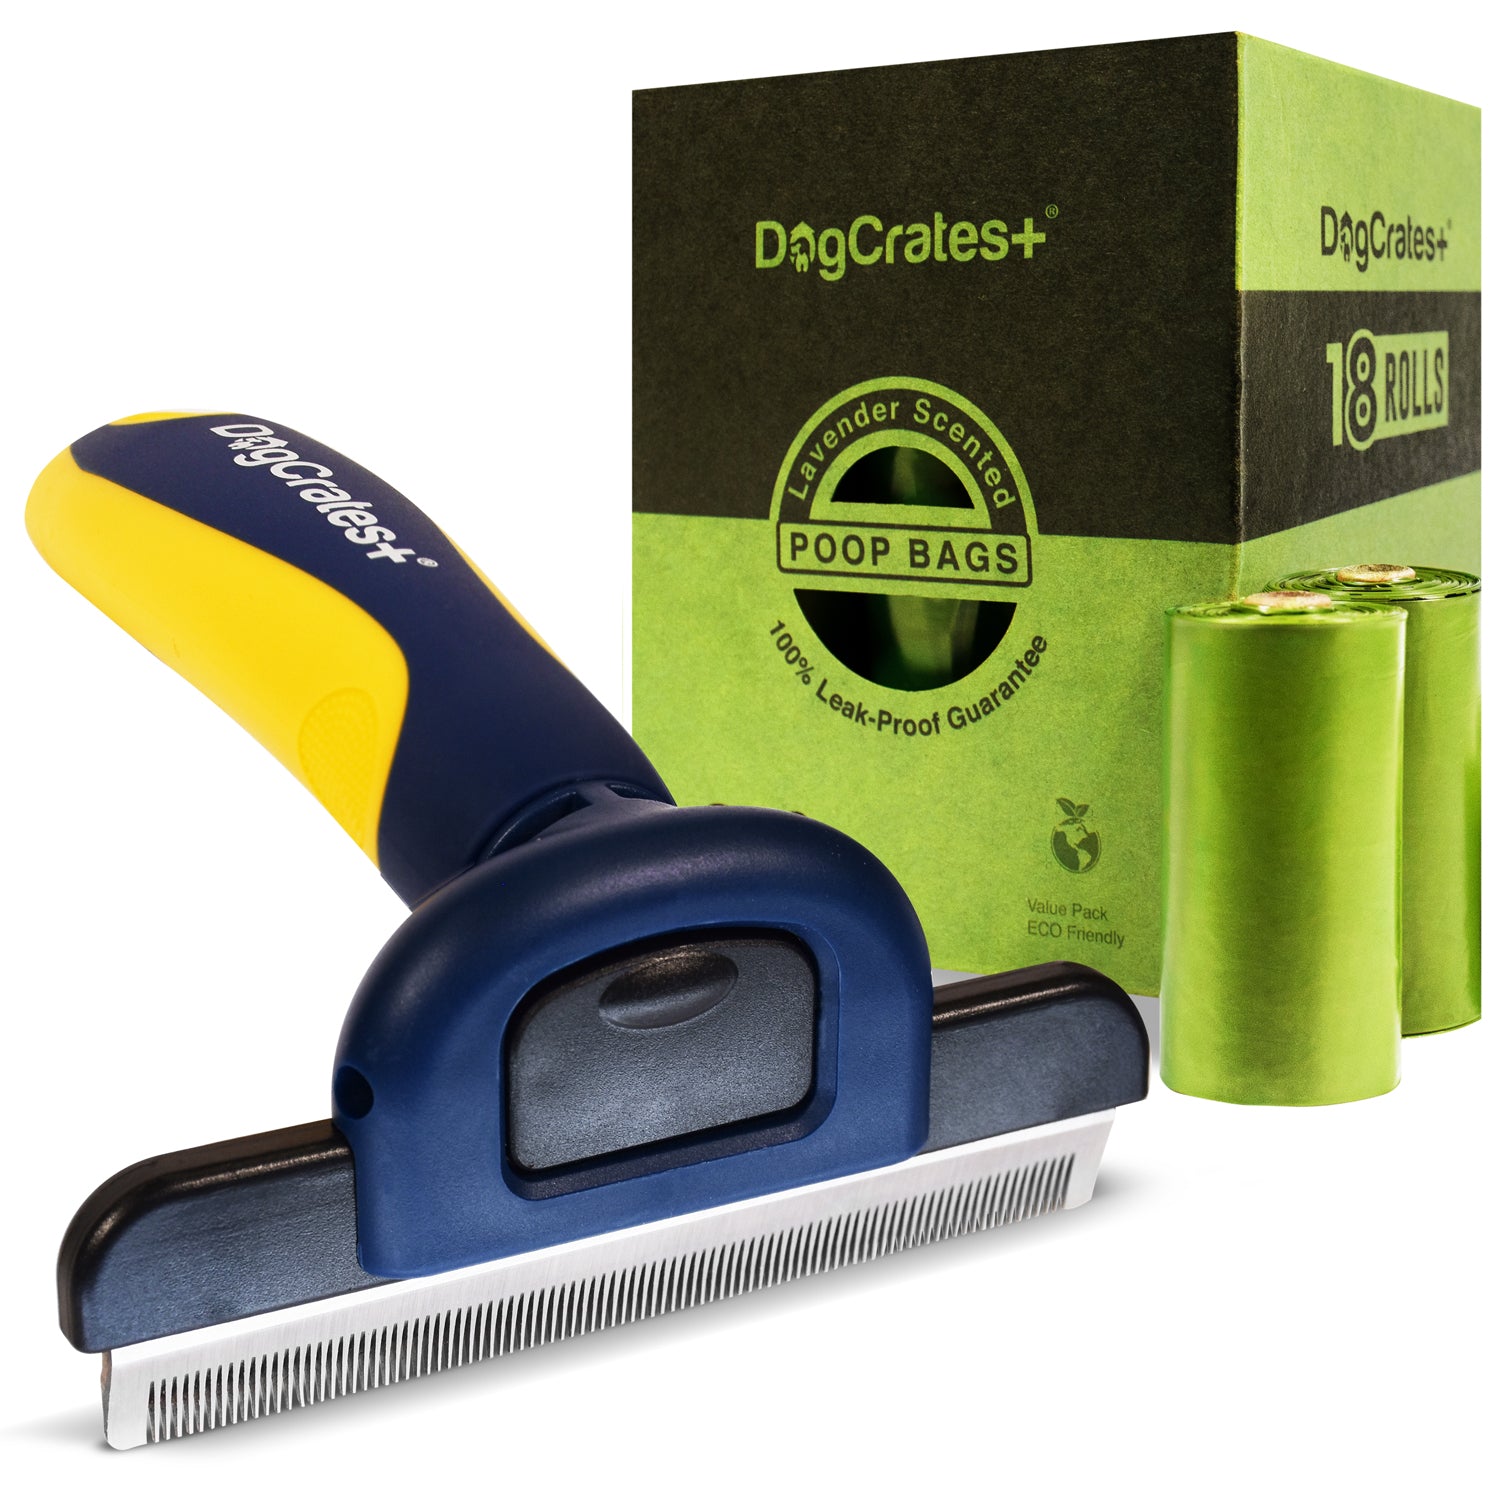 270 Biodegradable Dog Poop Bags + Deshedding Brush Grooming Tool BUNDLE